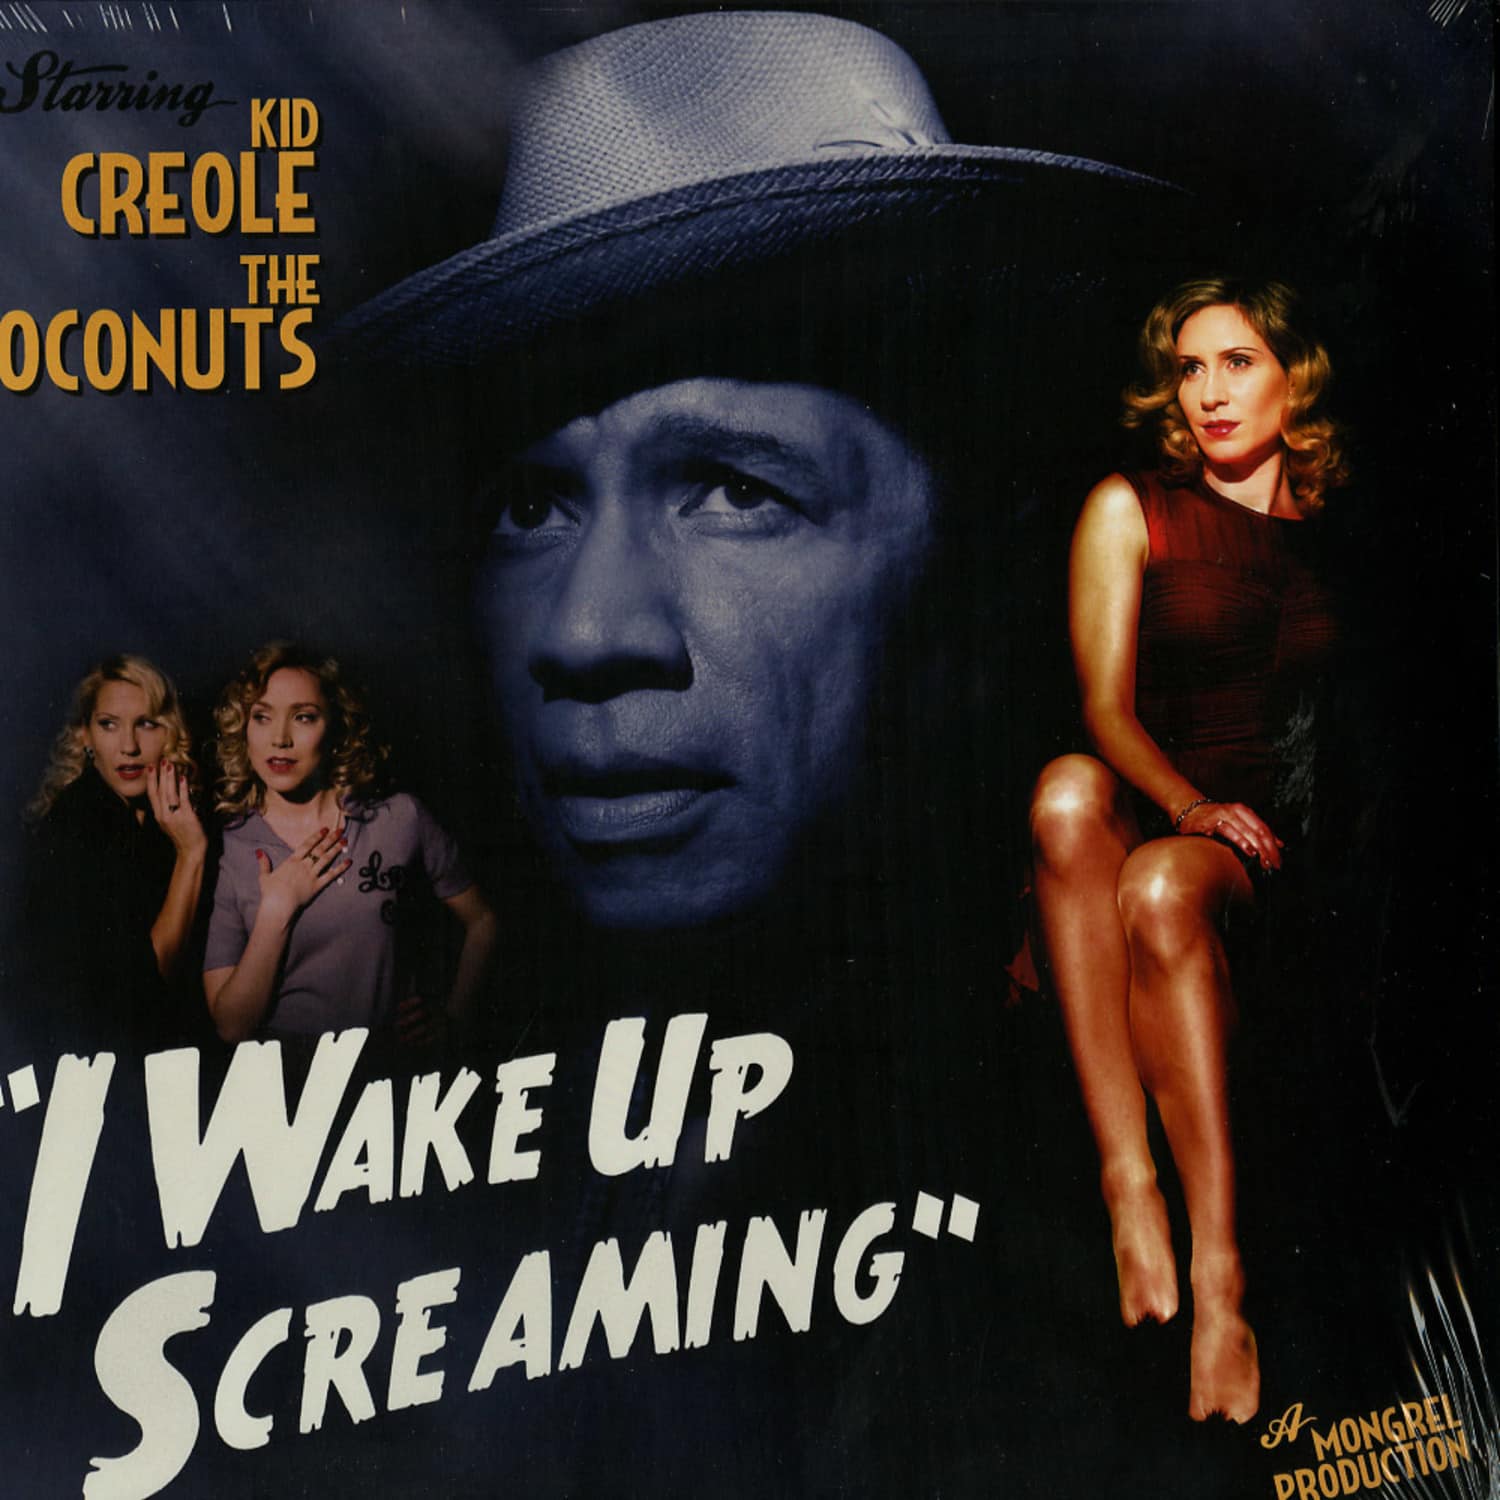 Kid Creole & The Coconuts - I WAKE UP SCREAMING 